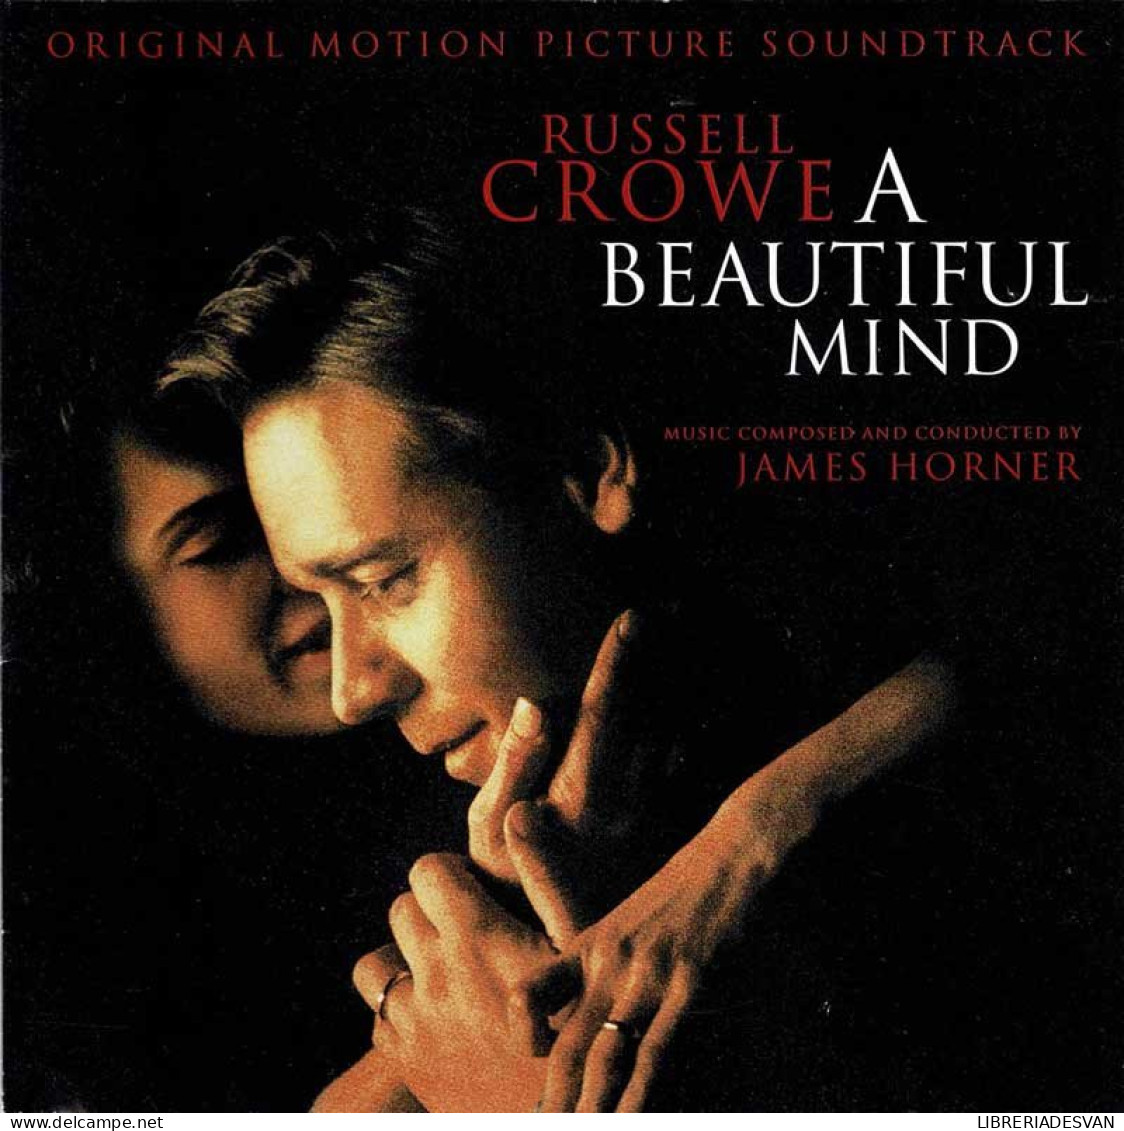 James Horner - A Beautiful Mind (Original Motion Picture Soundtrack). CD - Soundtracks, Film Music